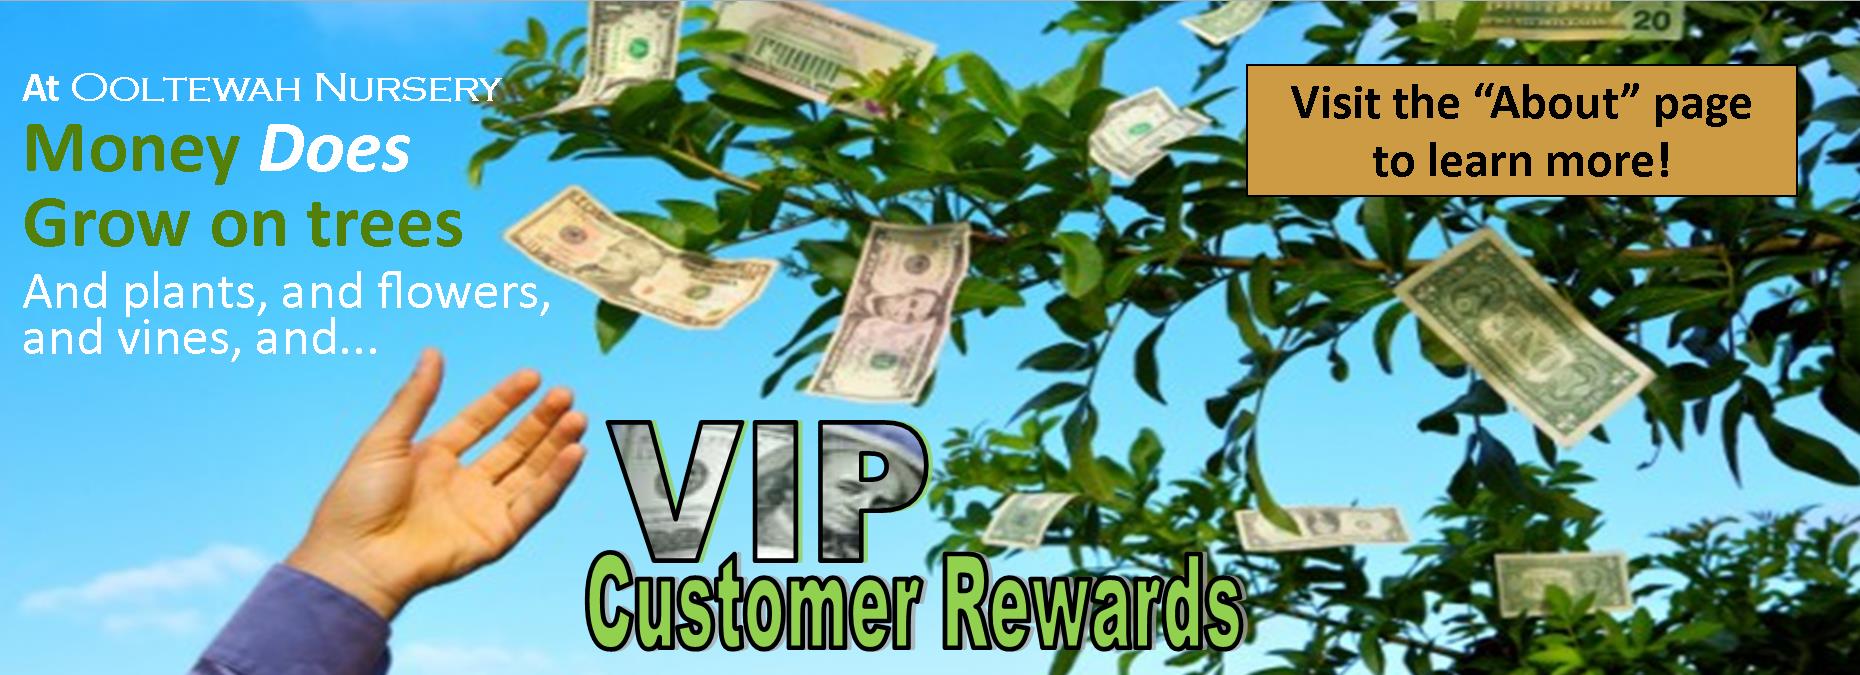 assets/Uploads/VIP-Rewards23.jpg